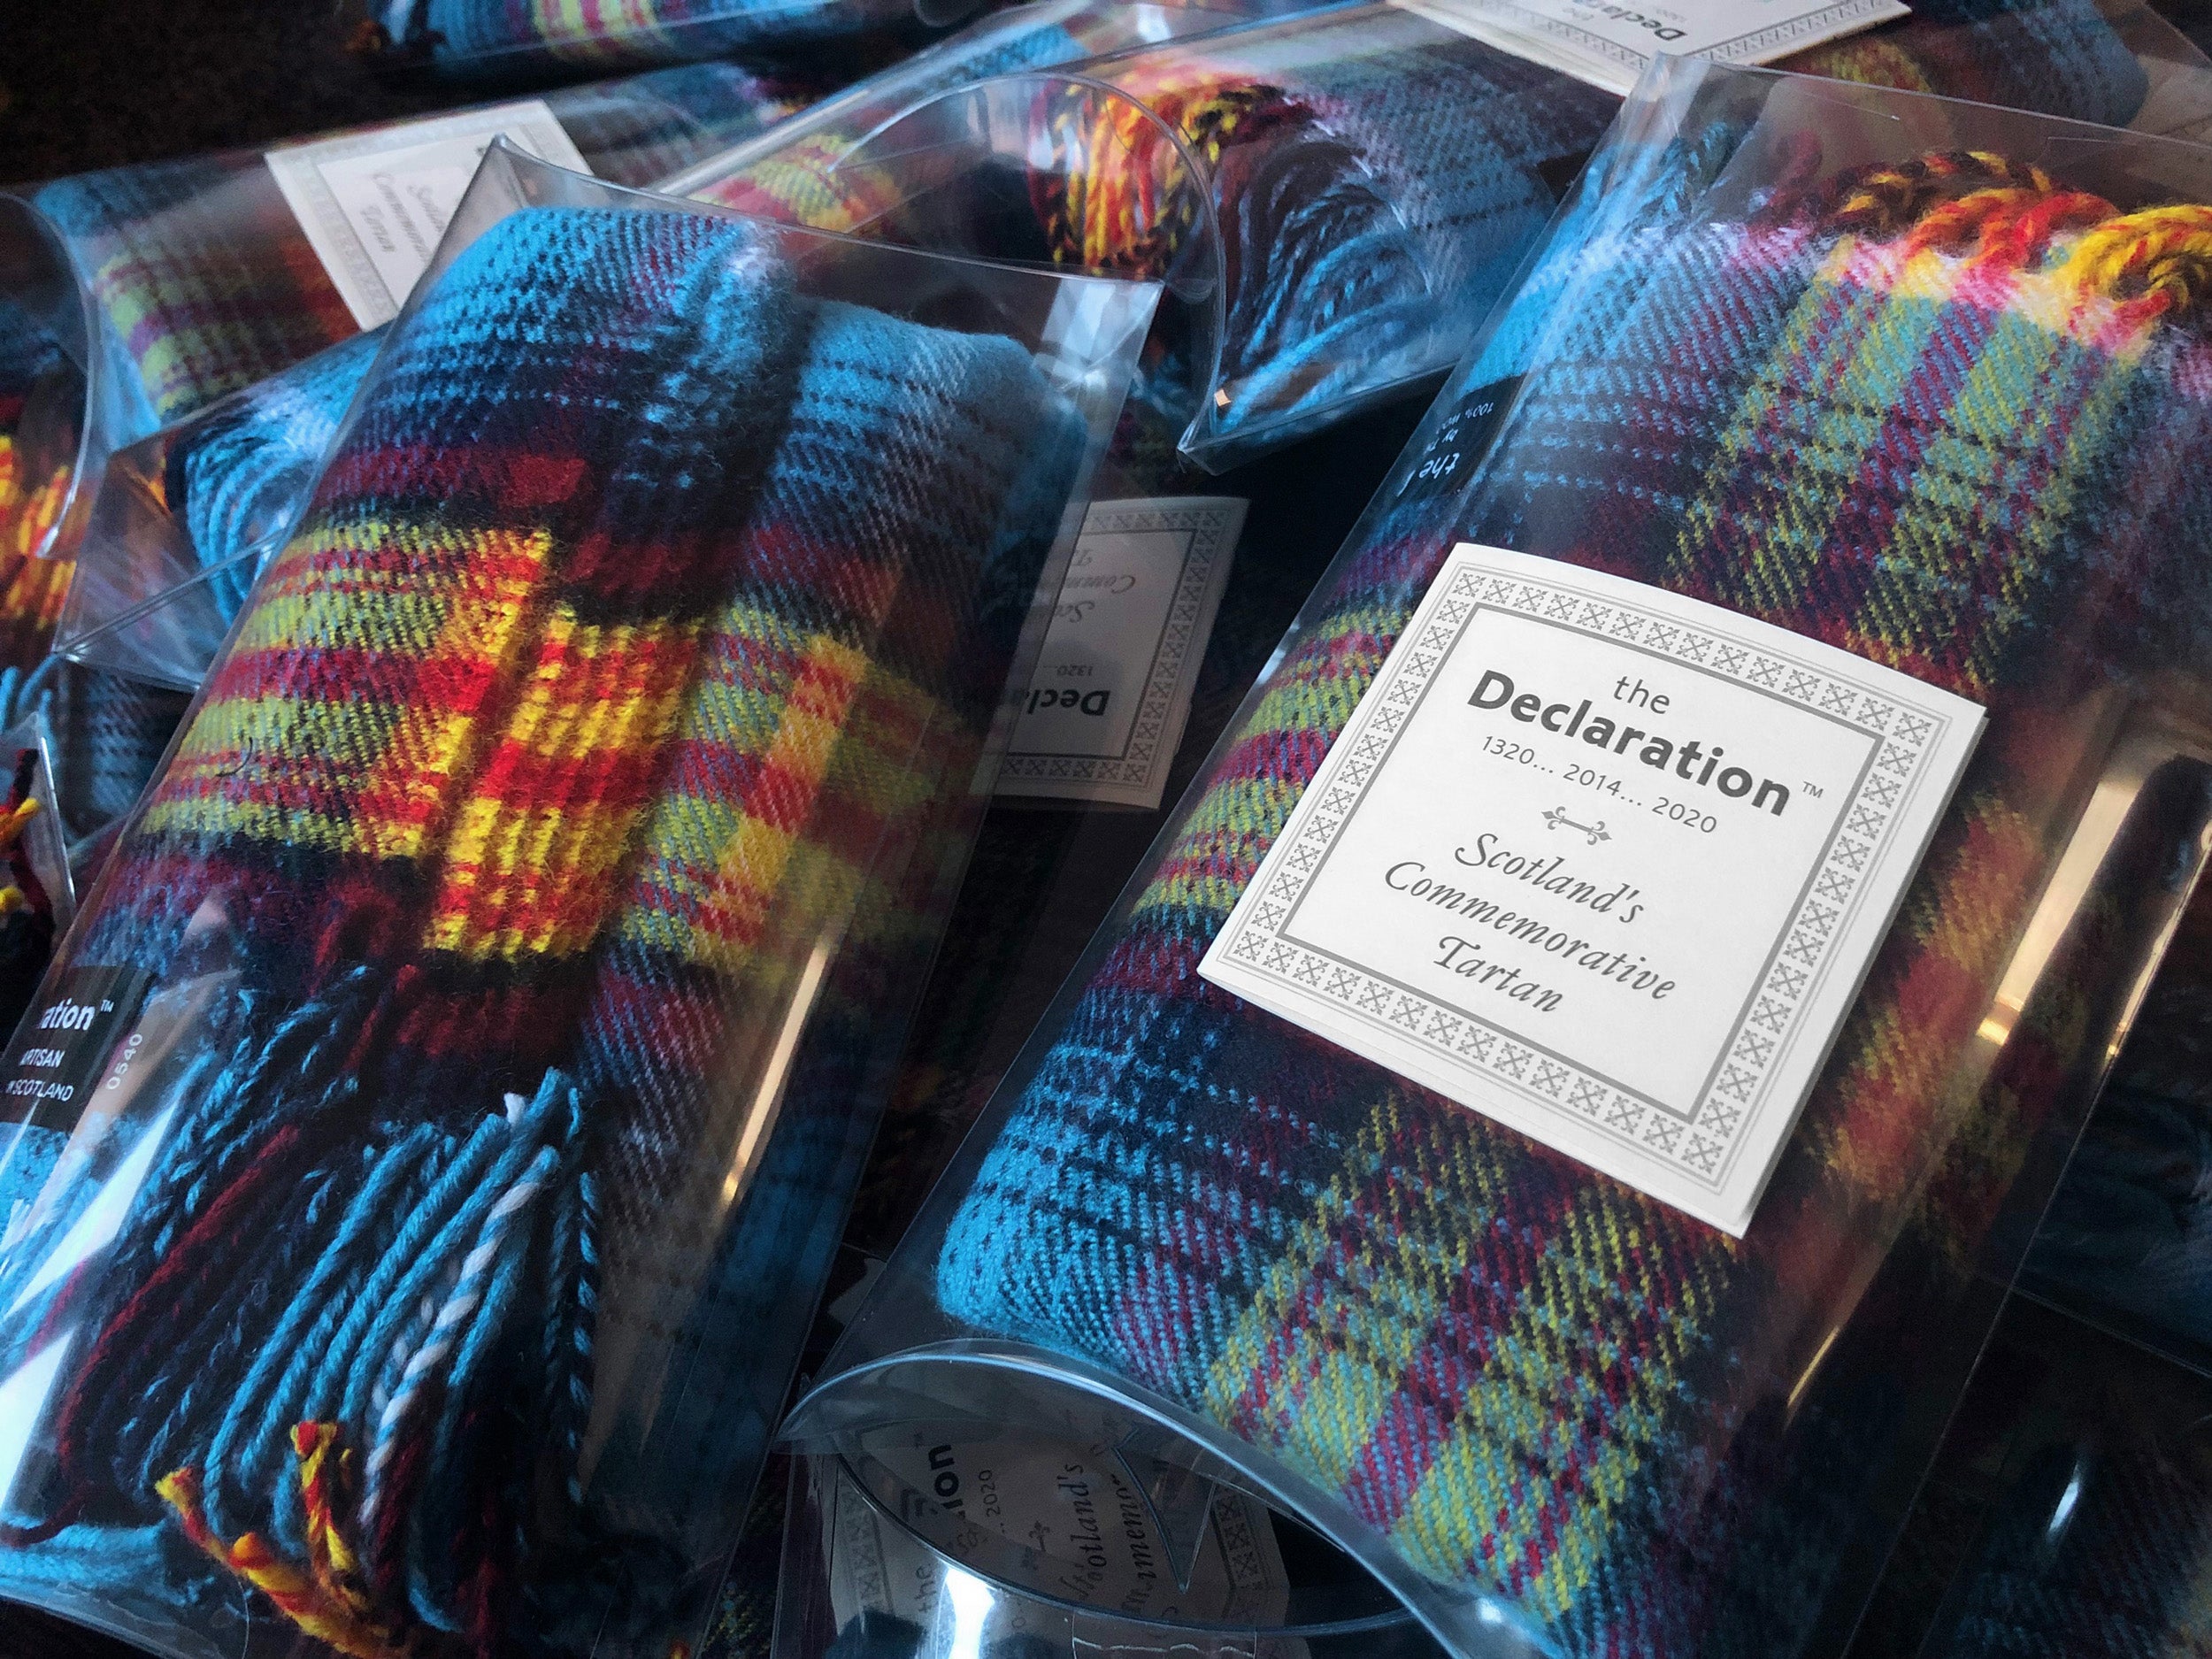 The Declaration of Scottish Independence Tartan - Lambswool Scarf